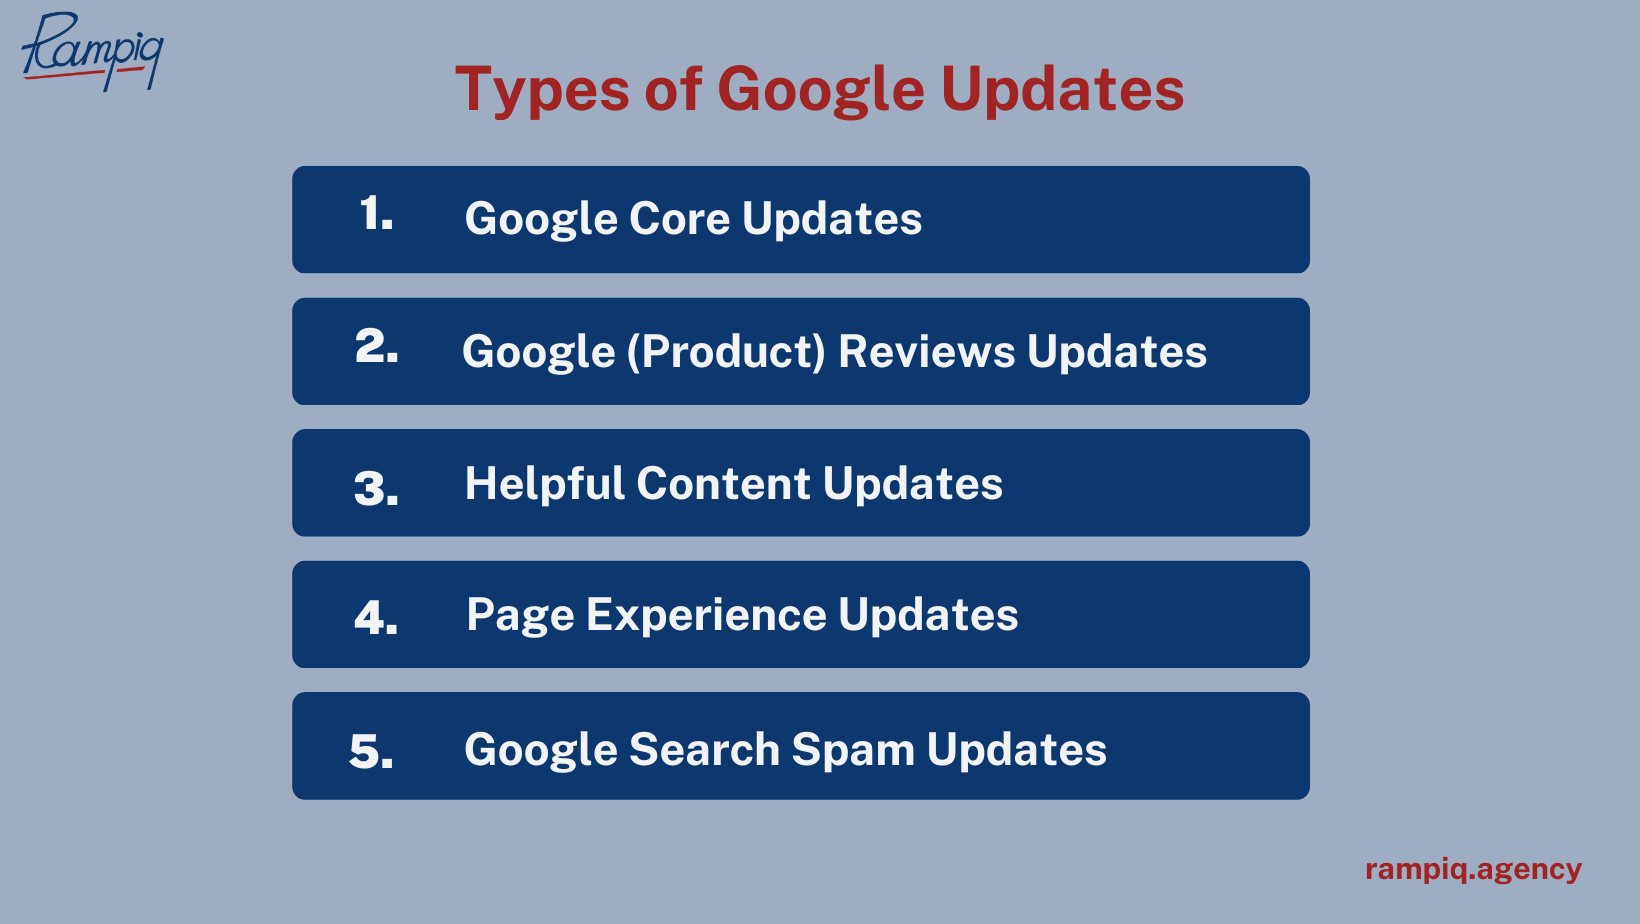 Types of Google Updates